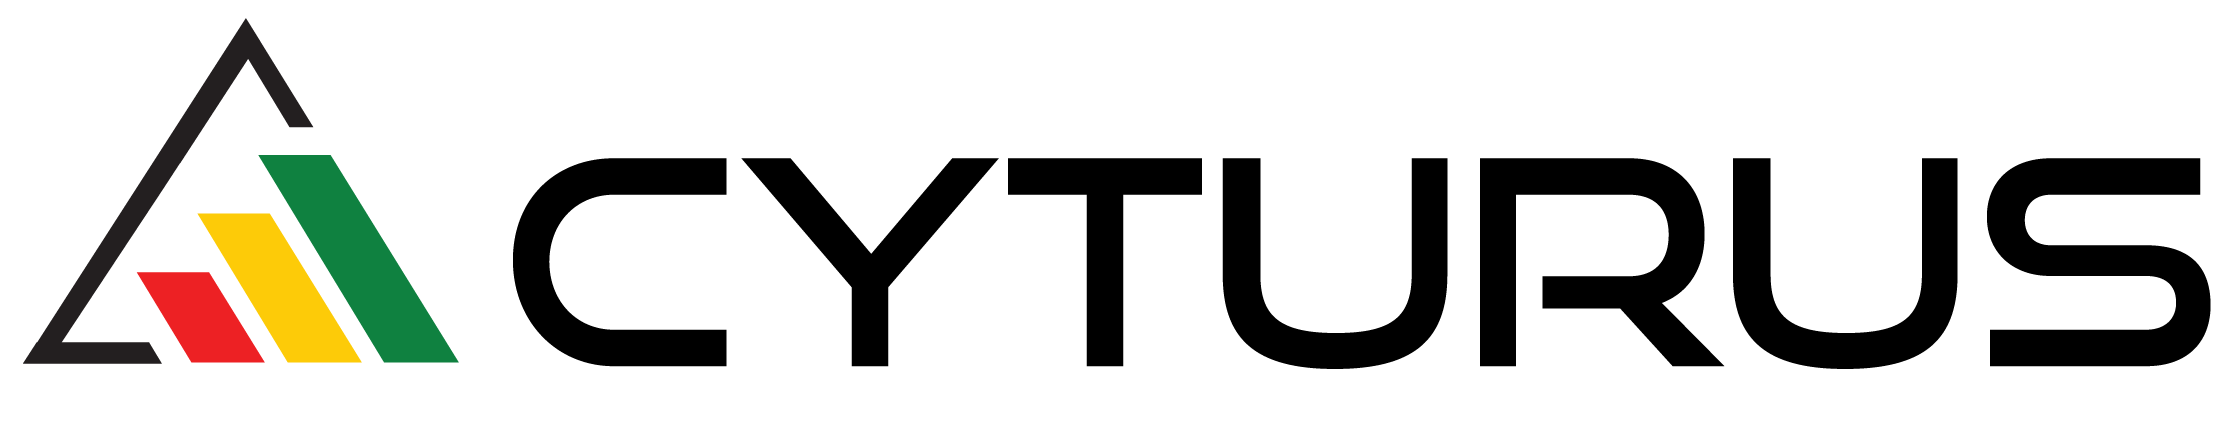 Cyturus-Logo--02.png